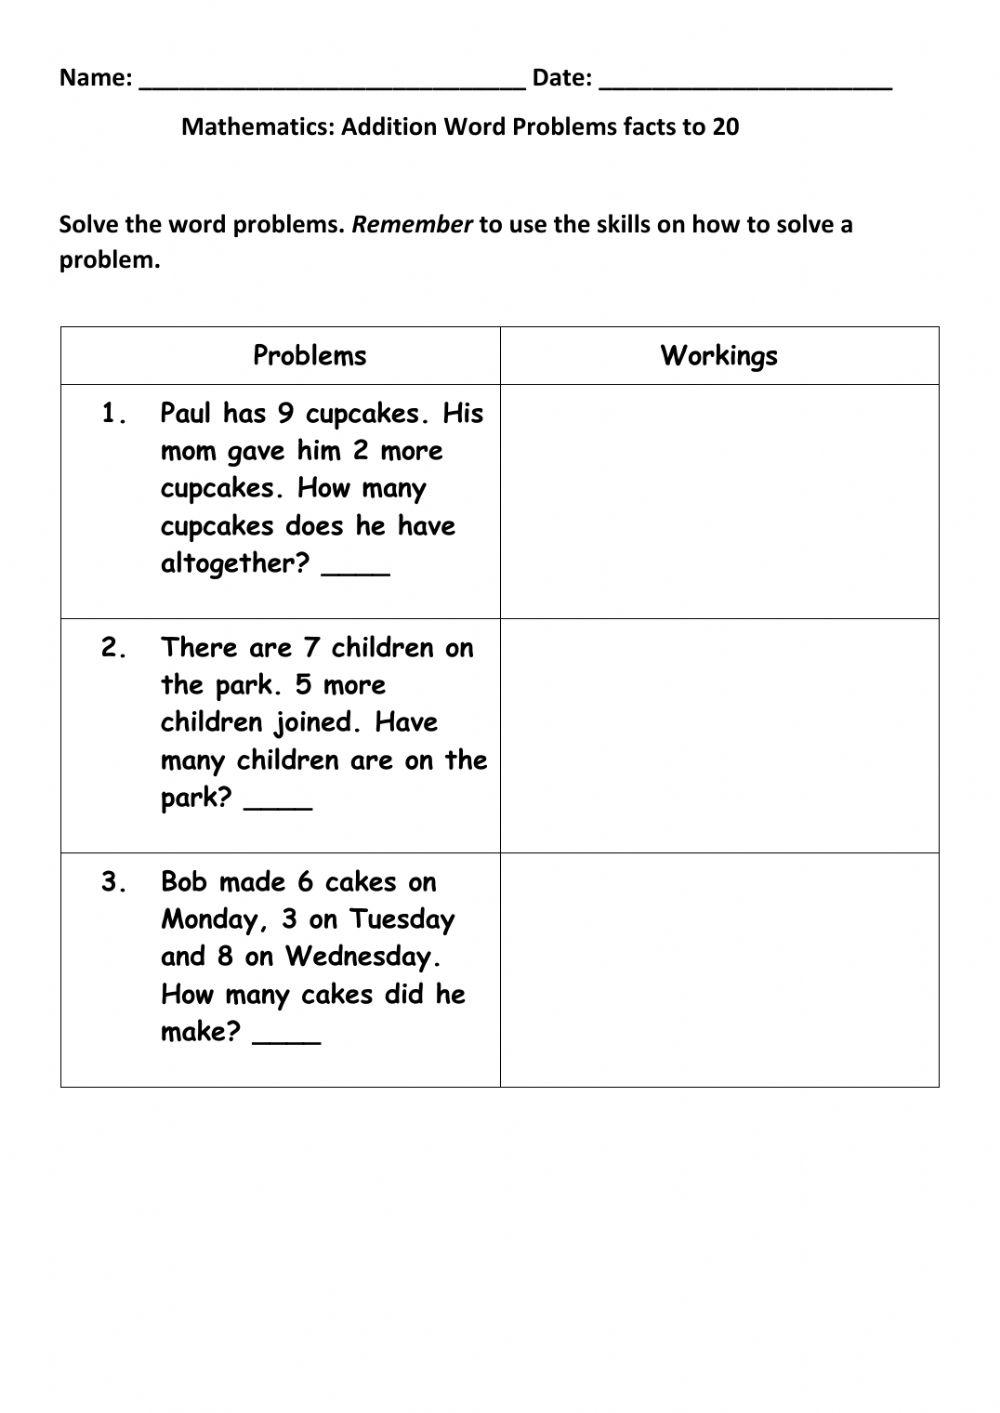 Mathematics Addition word problem facts to 20 classwork